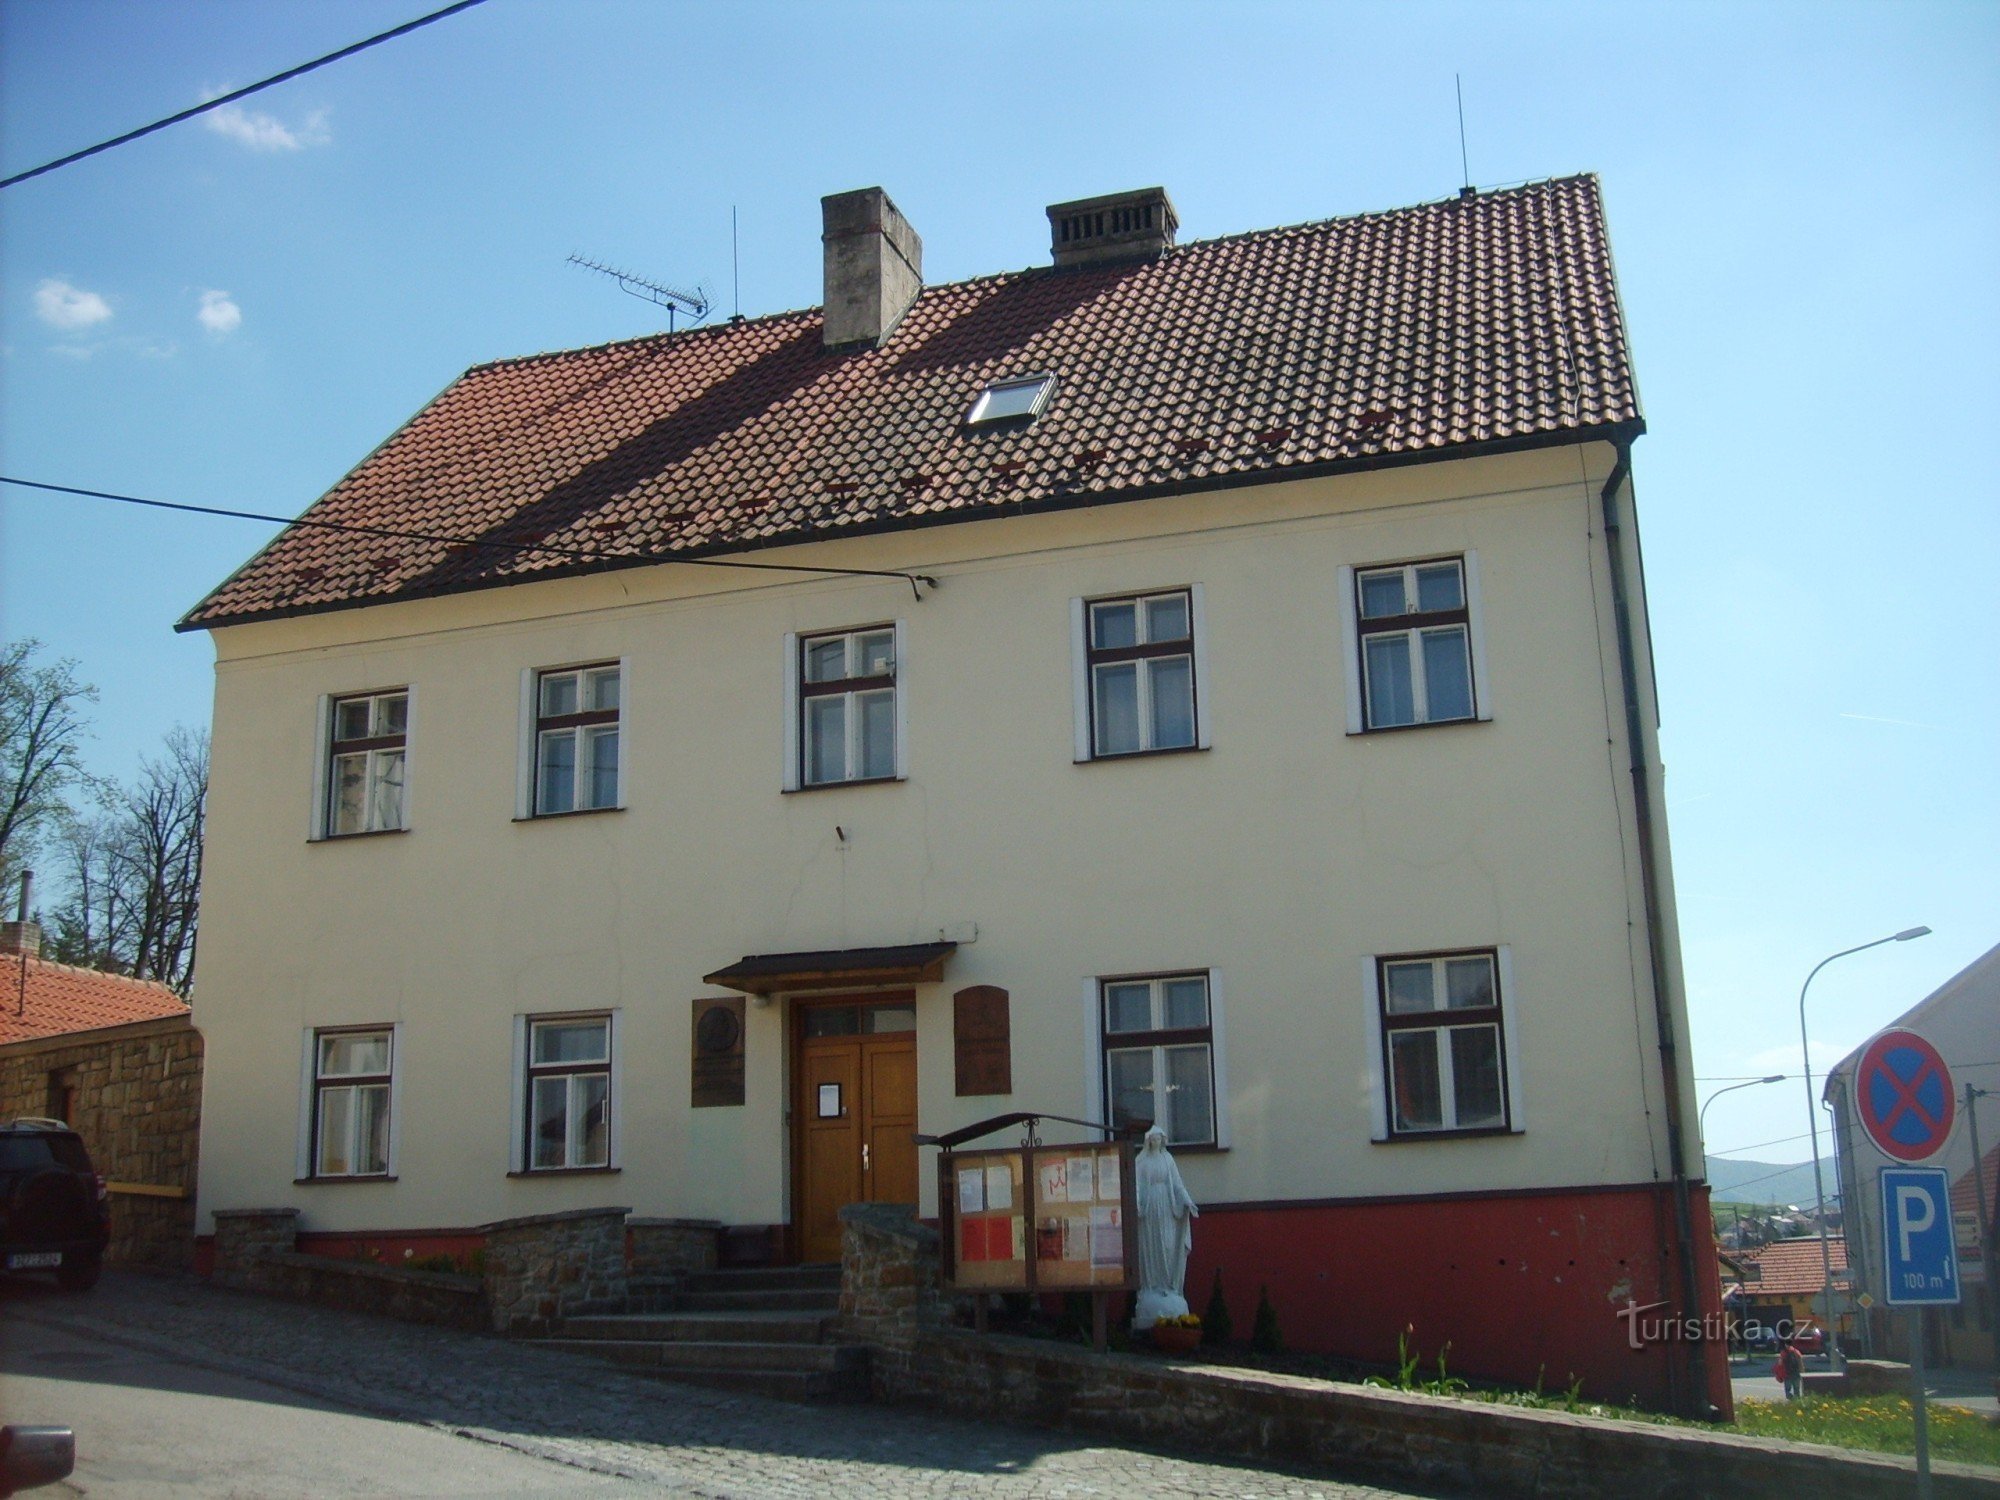 Parish office in Brumov-Bylnice